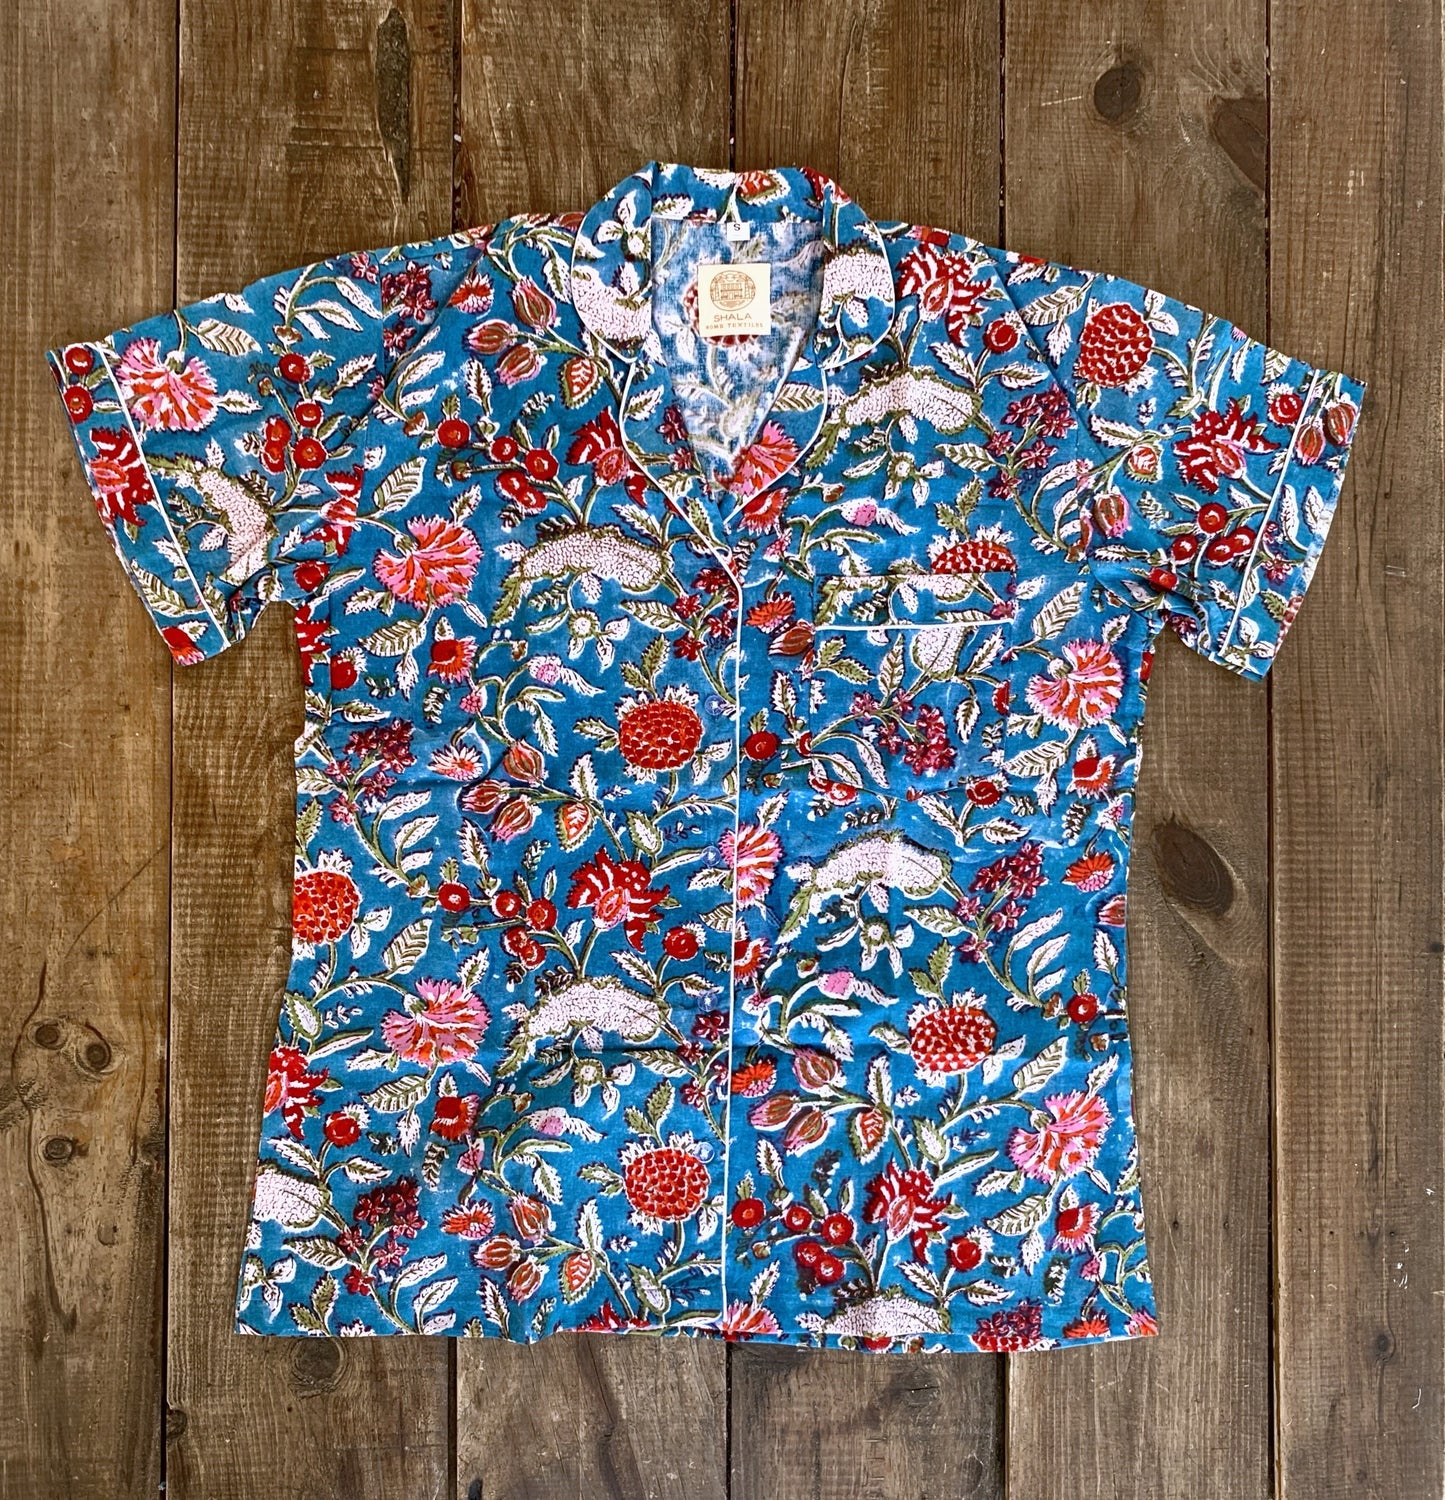 Pijama manga y pantalón corto · Algodón puro estampado block print artesanal en India · Pijama verano algodón 100% · Azul flores rojo